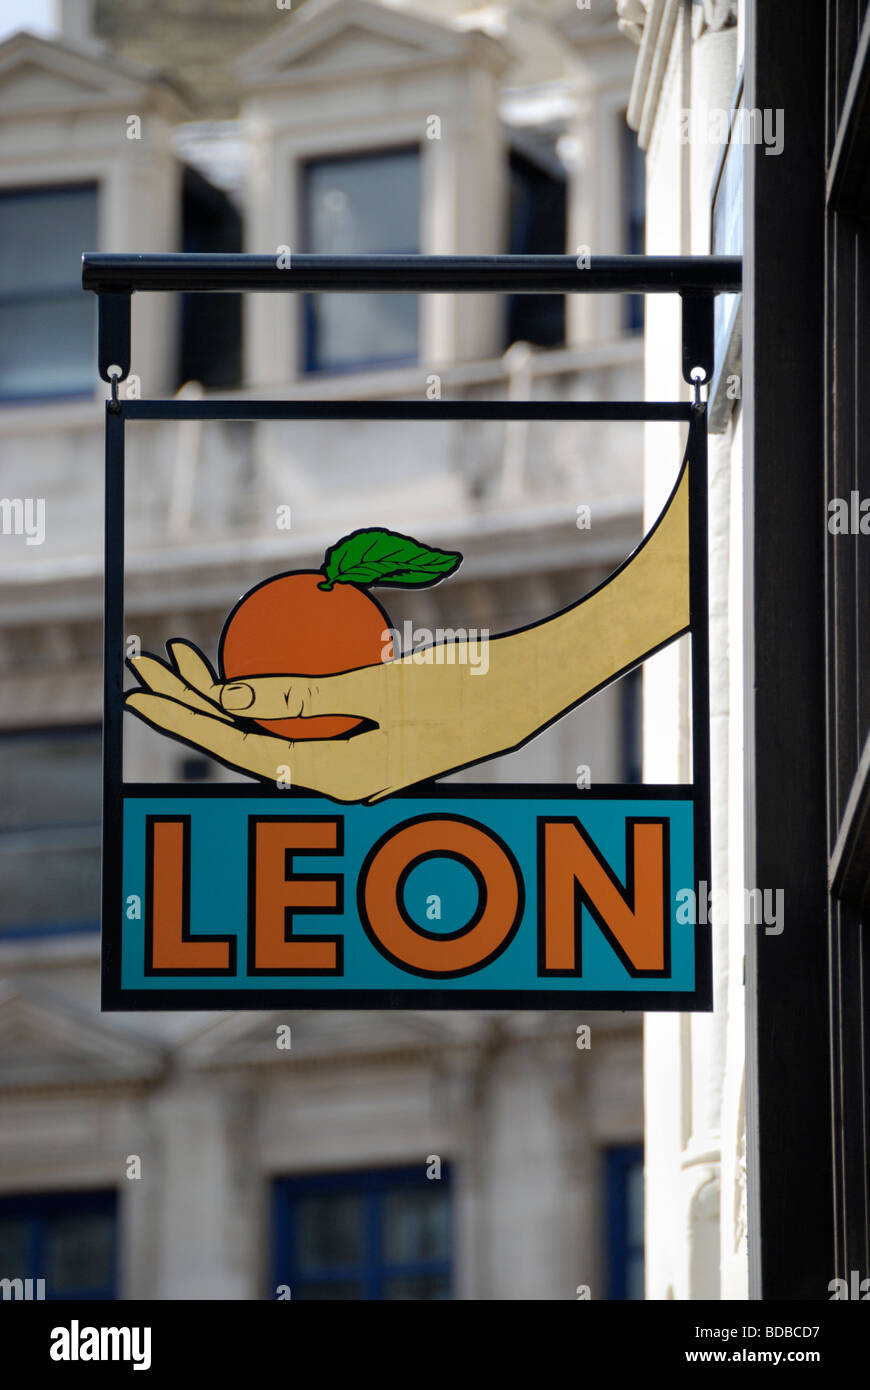 Leon restaurant sign logo London England Stock Photo